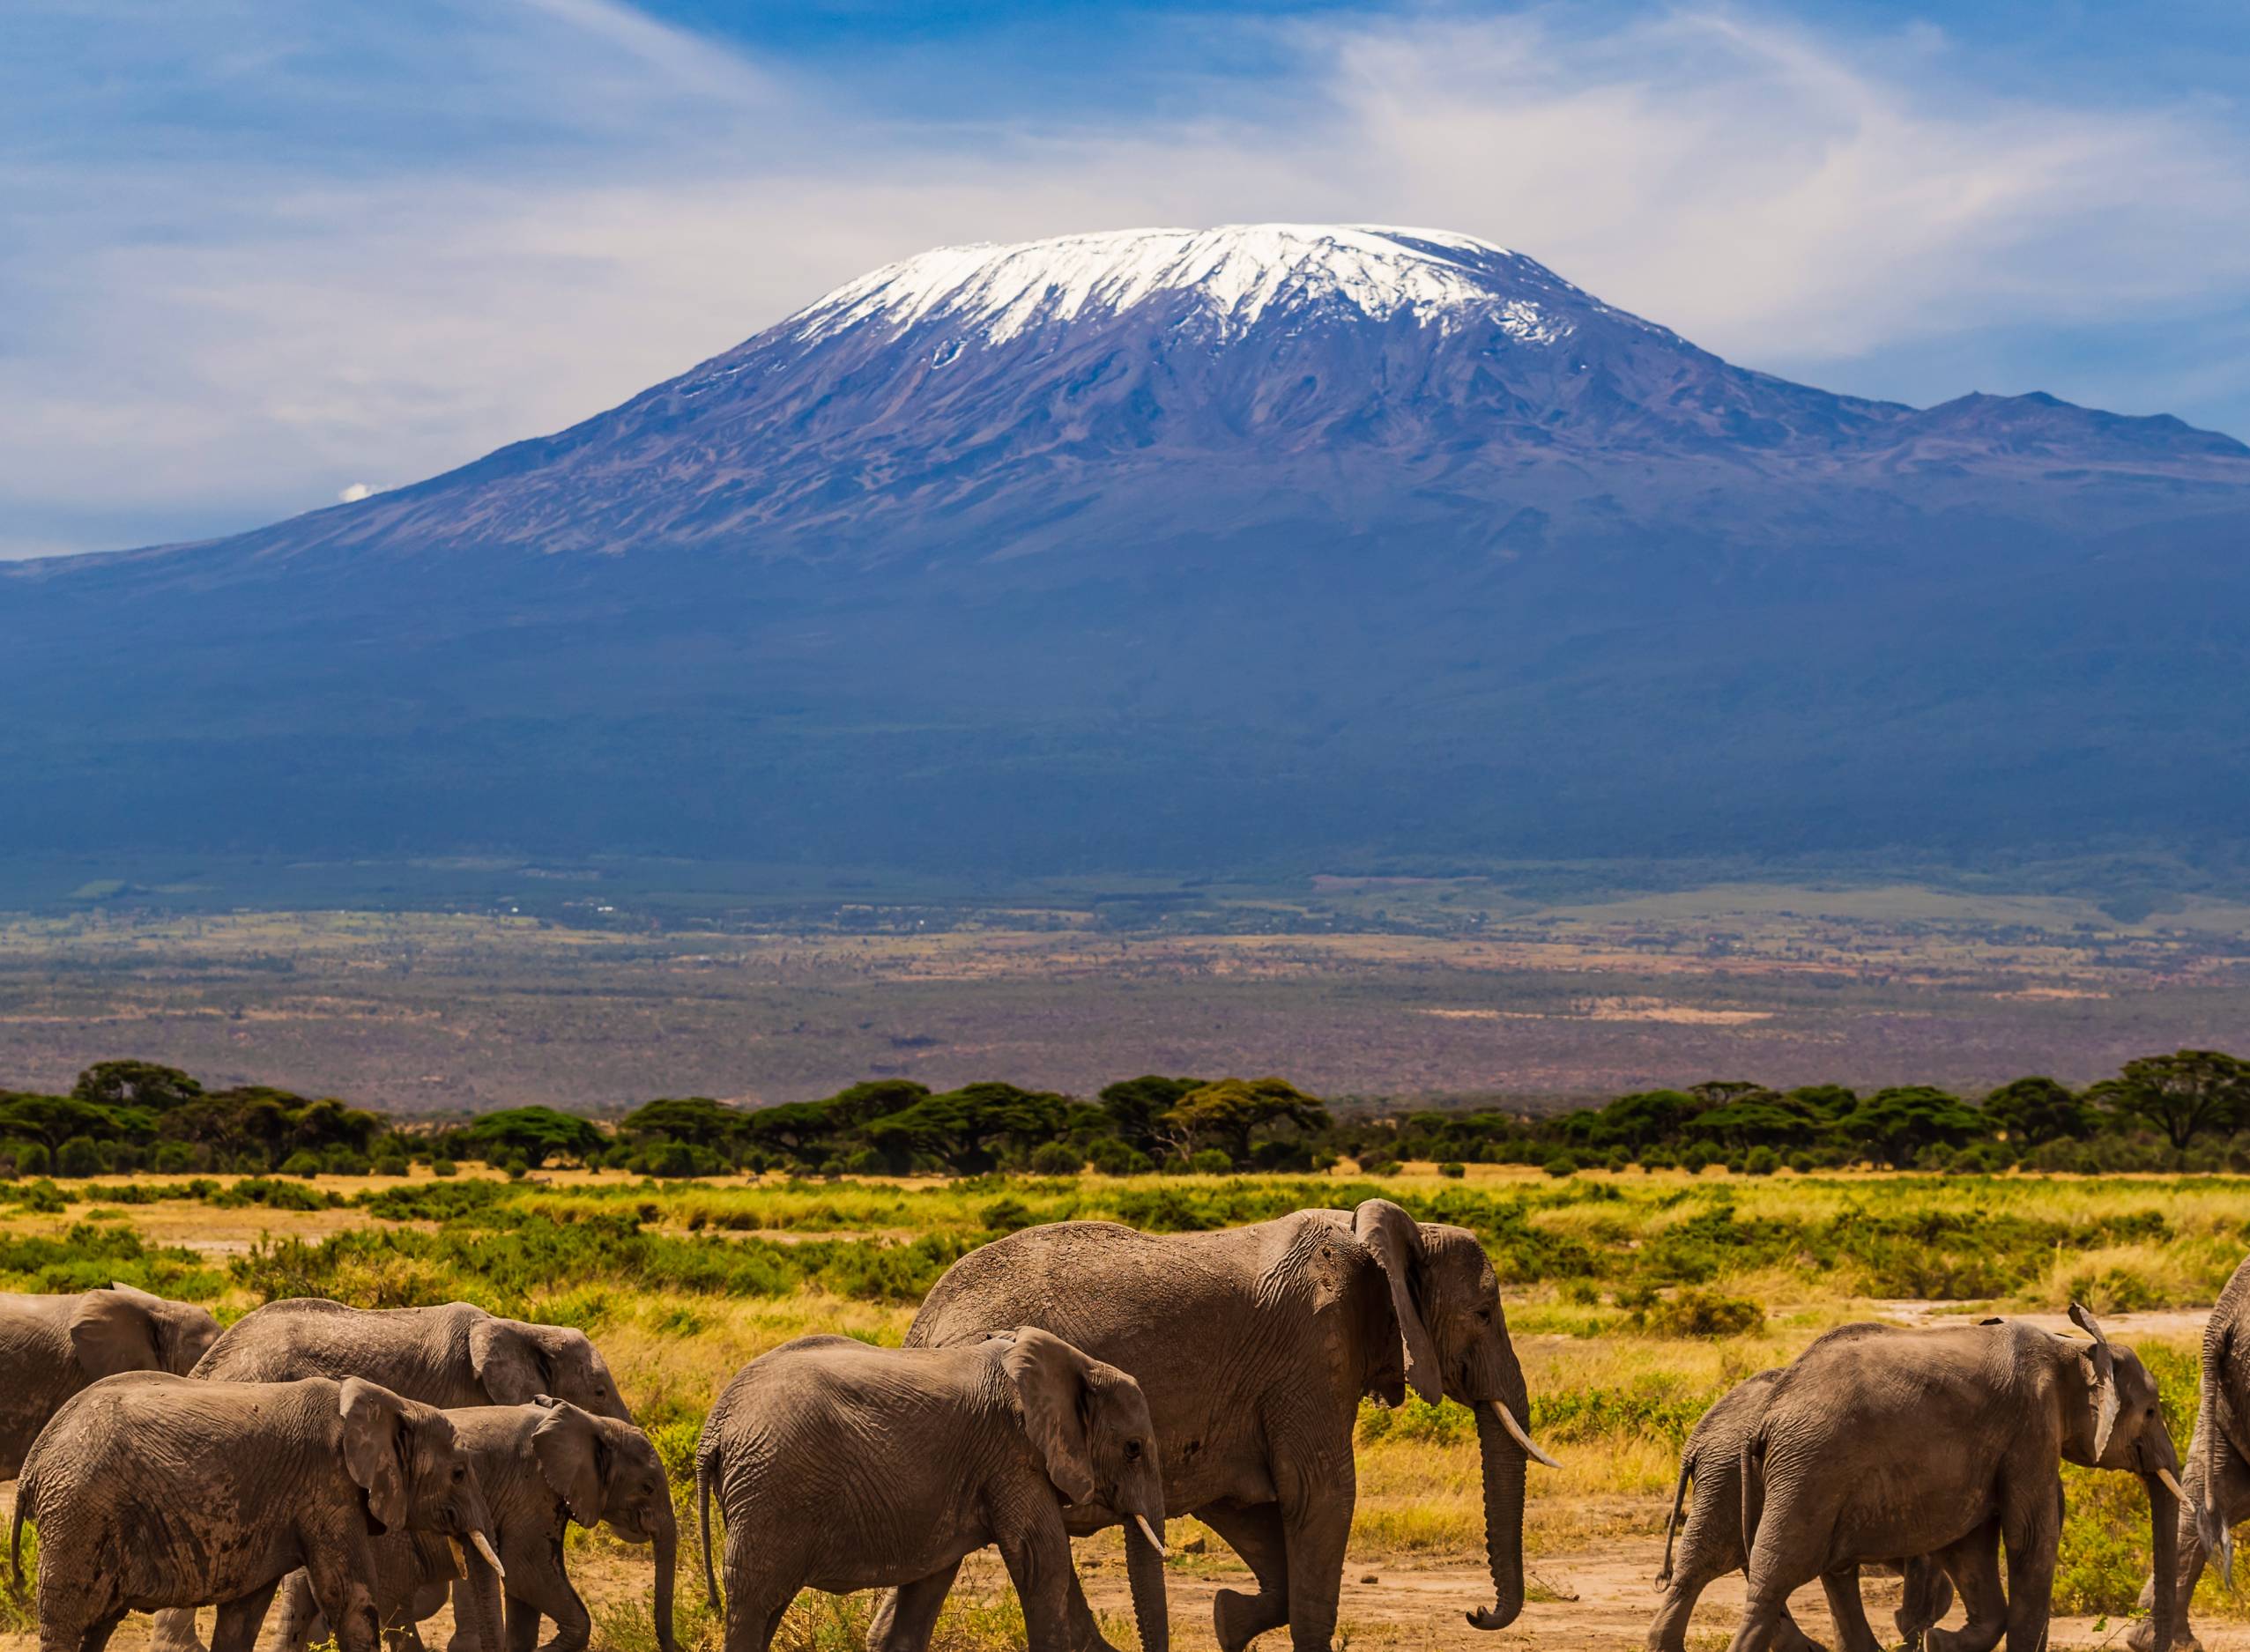 African elephants walking in the Savannah, Mount Kilimanjaro on the background, southern Kenya, Africa